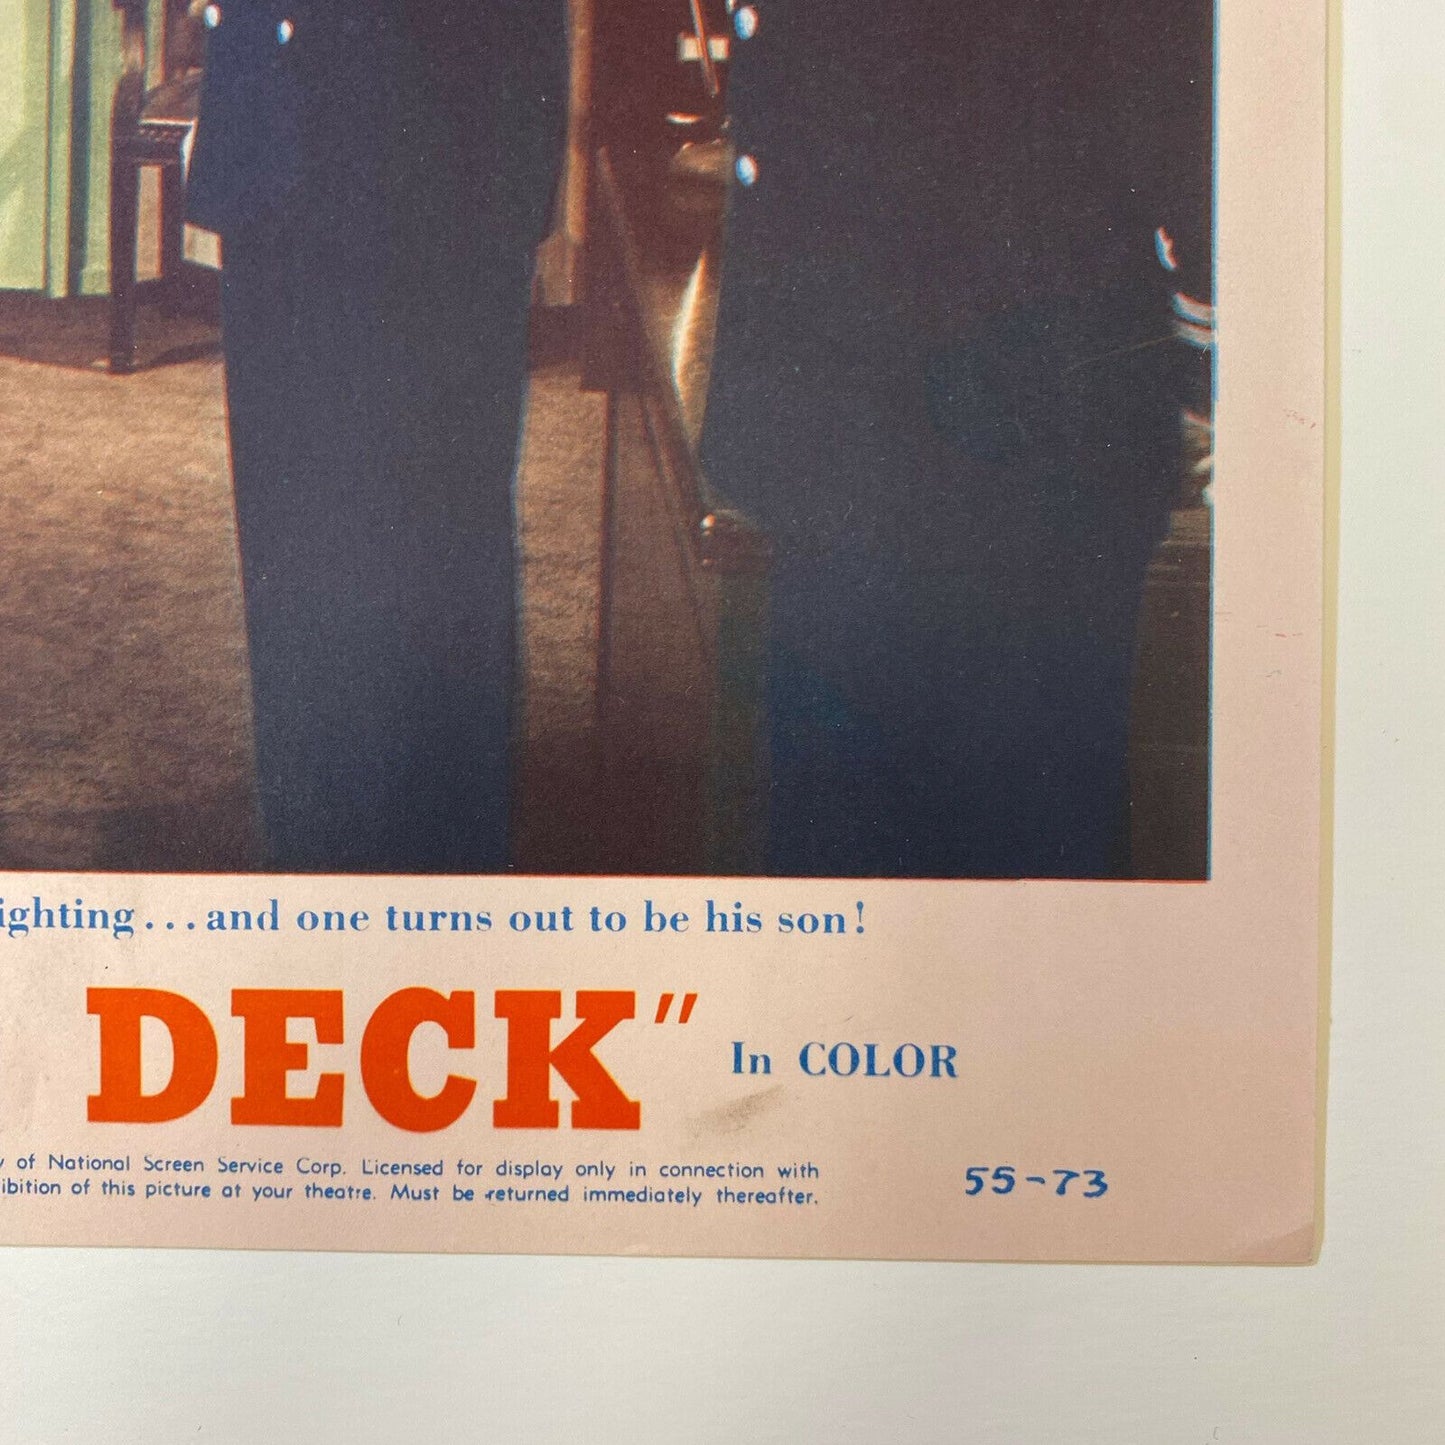 Hit The Deck ORIGINAL 1955 Lobby Card 5 Movie Poster Debbie Reynolds Near MINT